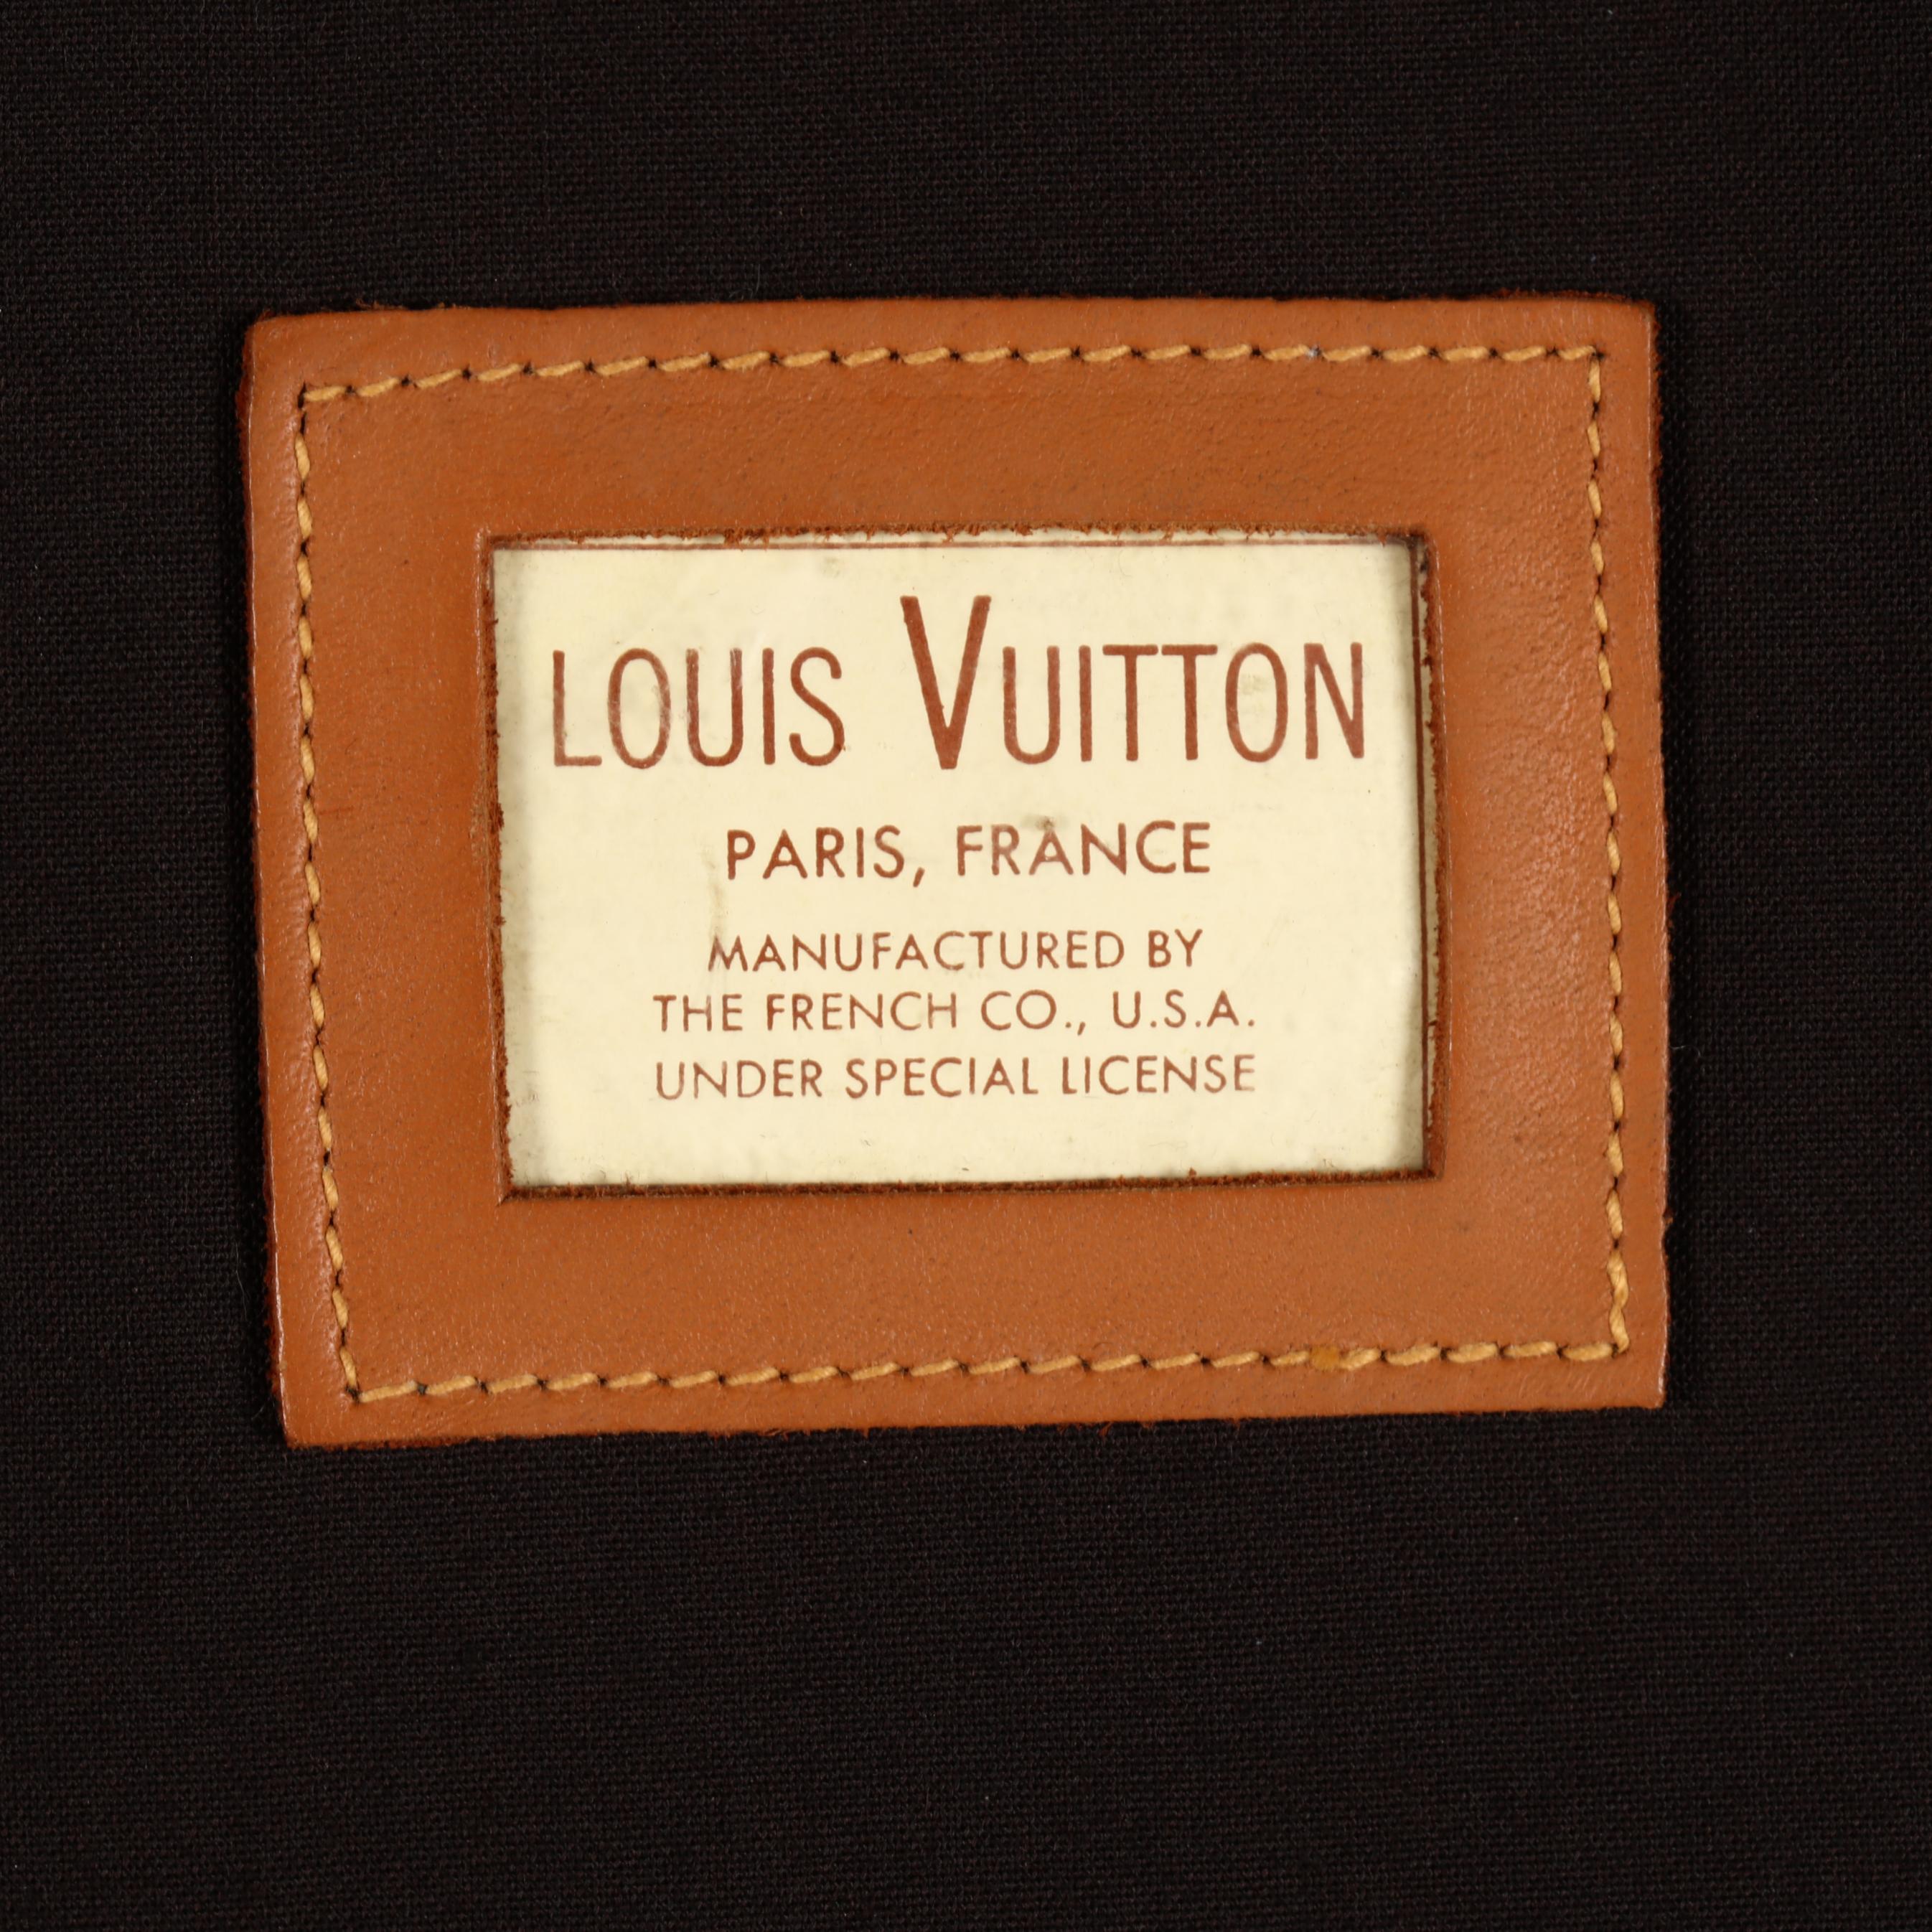 Louis Vuitton Monogram Garment Bag MFG by The French Co. U.S.A. - Louis Vuitton  Monogram Garment Bag, MFG by The French Co. U.S.A. - Rafael Osona Auctions  Nantucket, MA